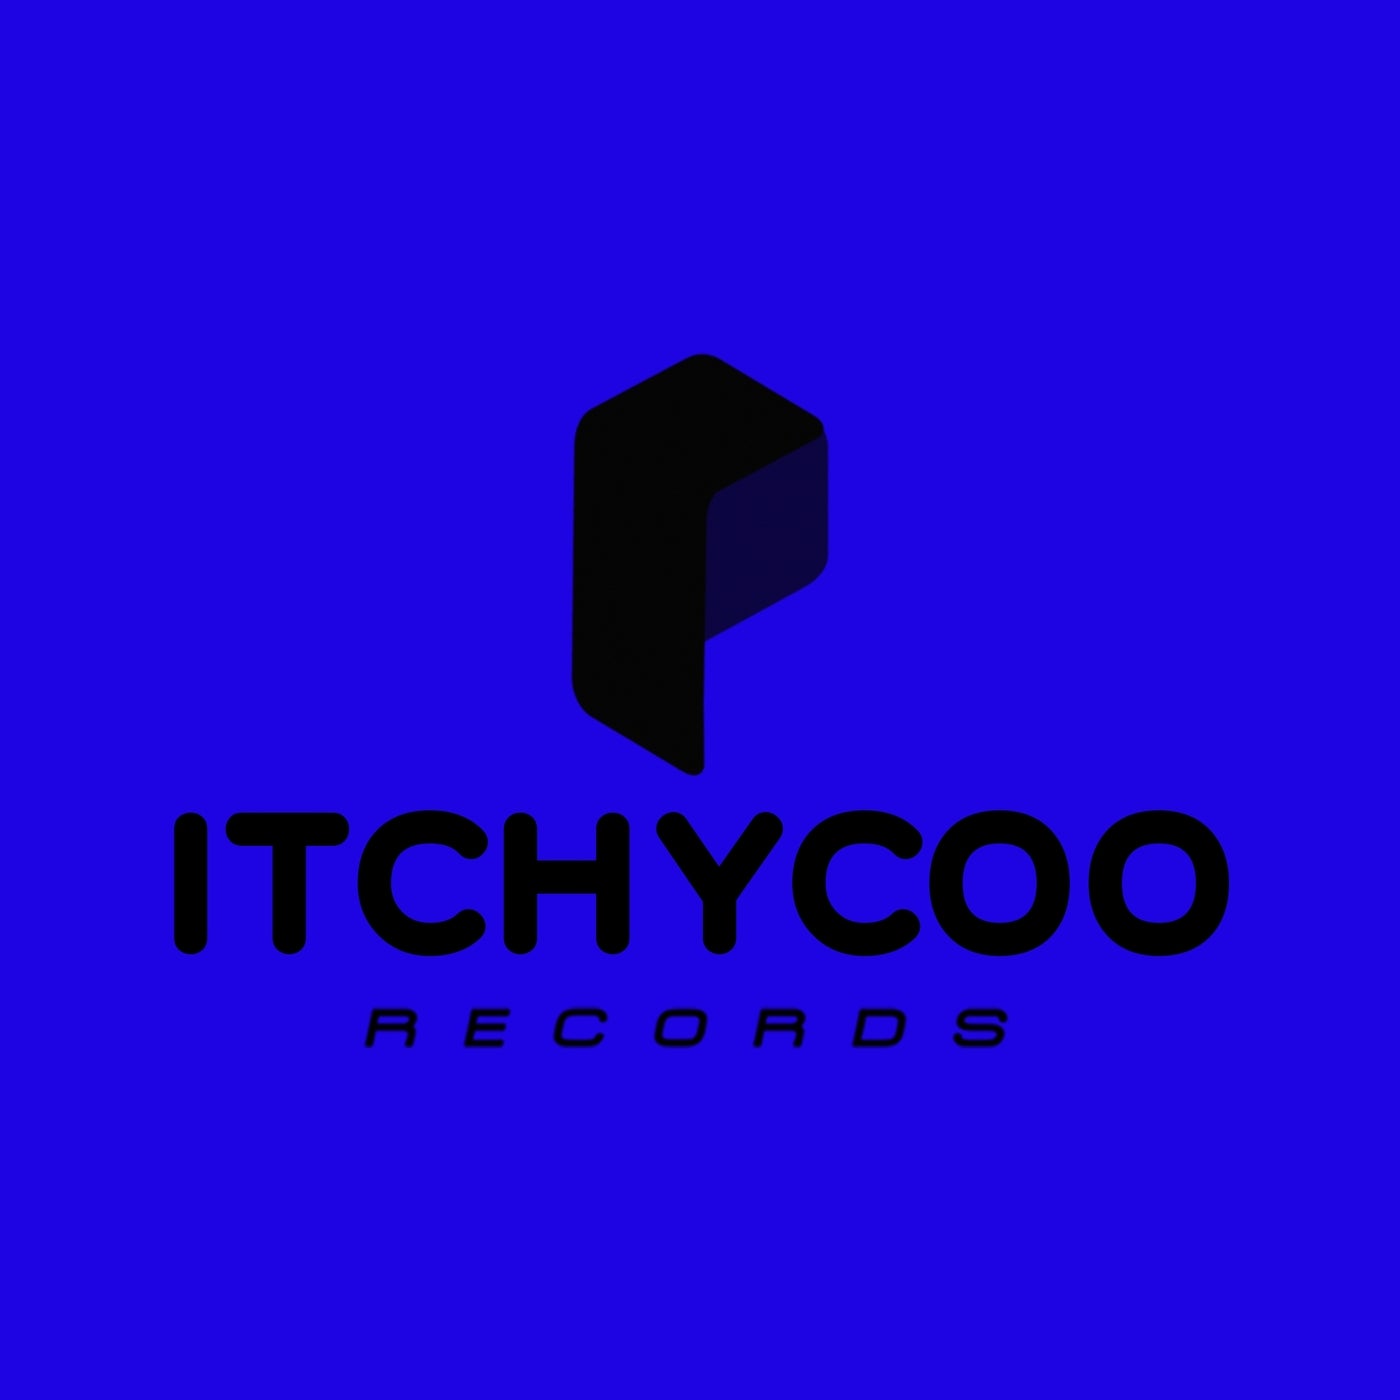 Itchycoo Trance Selection Vol. 13